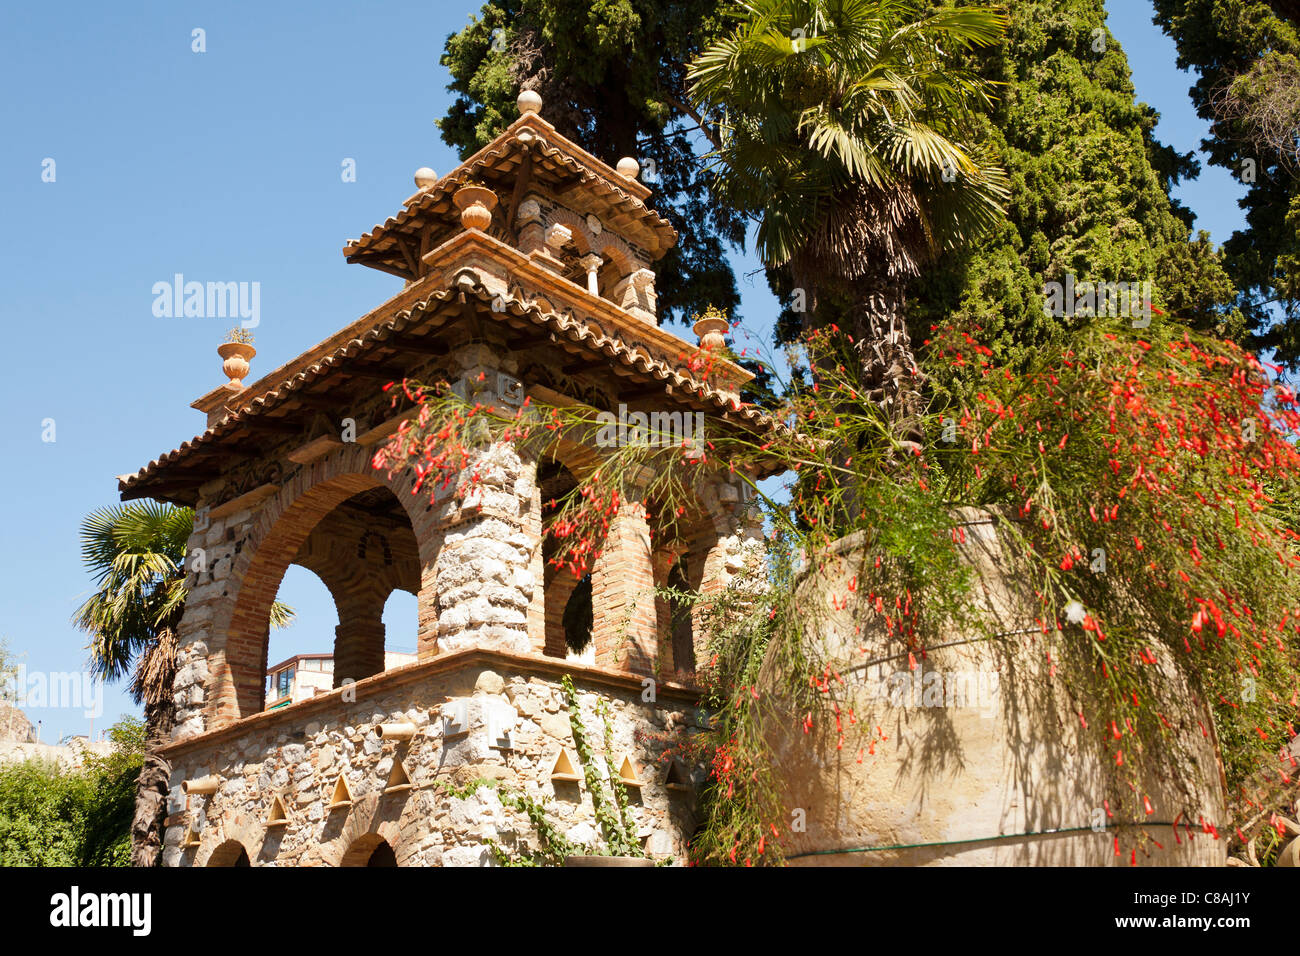 A building in Trevelyan Public Gardens, Villa Comunale, Via Bagnoli Croce, Taormina, Sicily, Italy Stock Photo